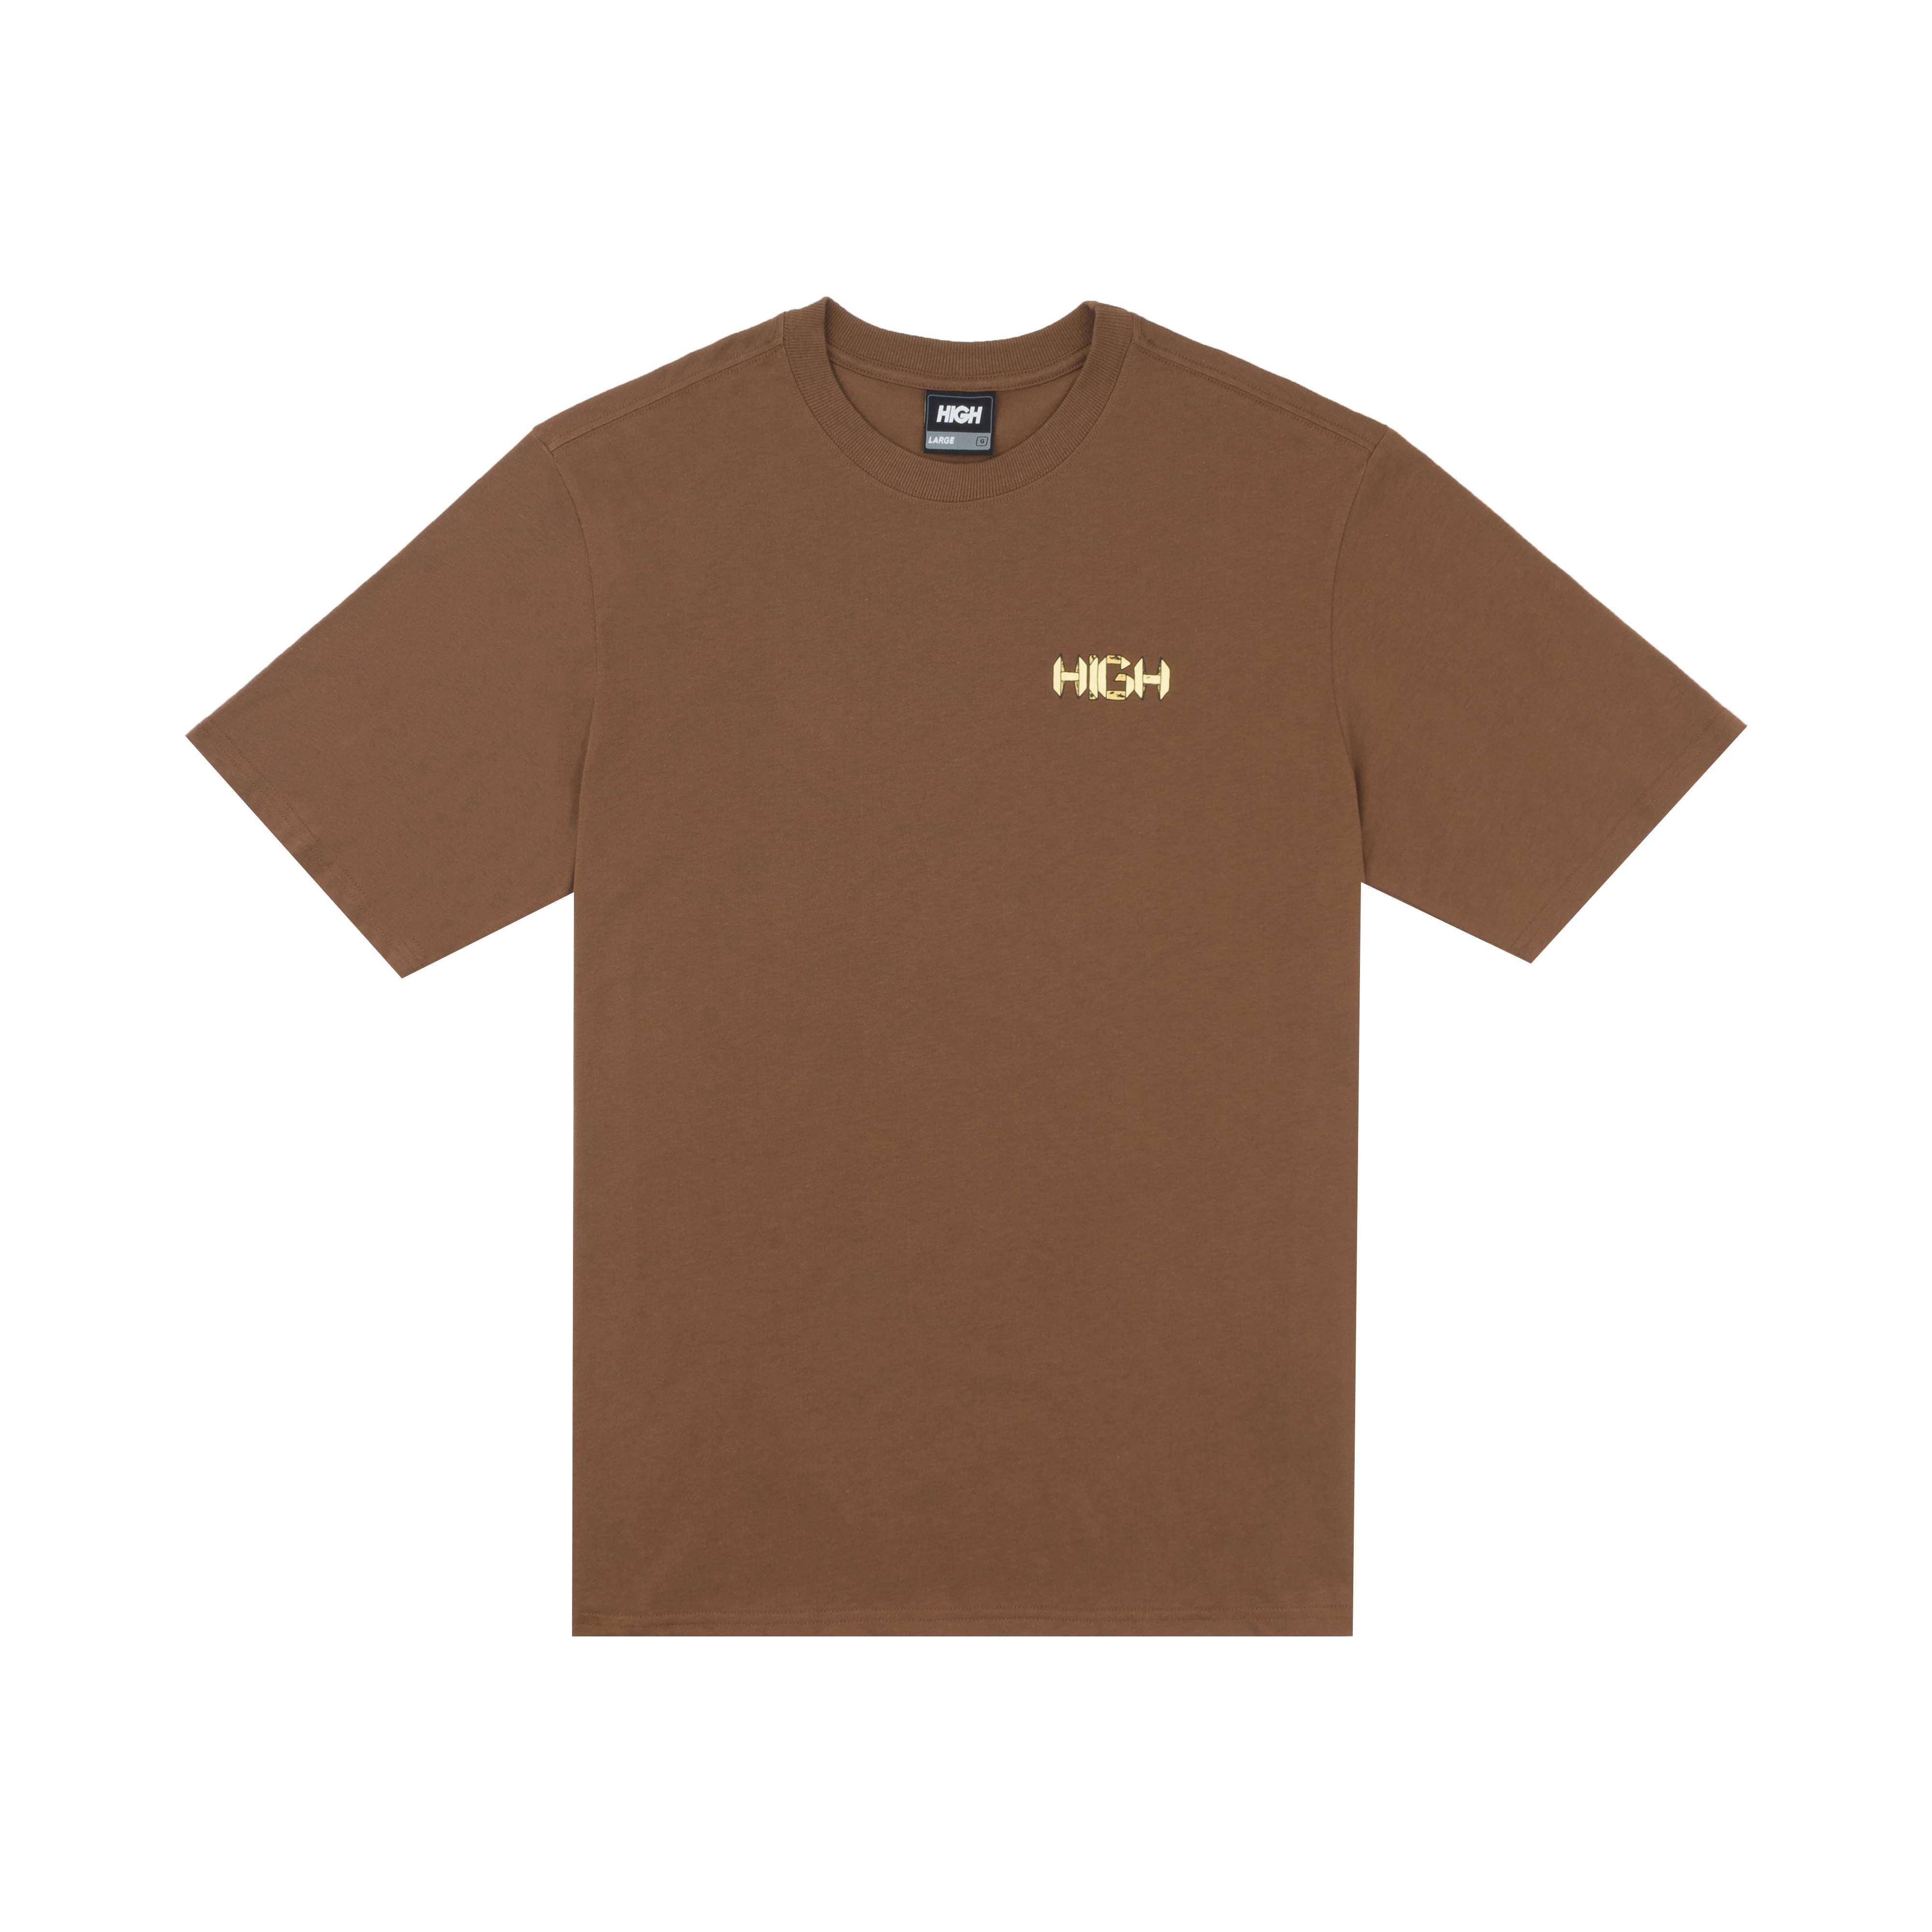 HIGH - Camiseta Origami Brown